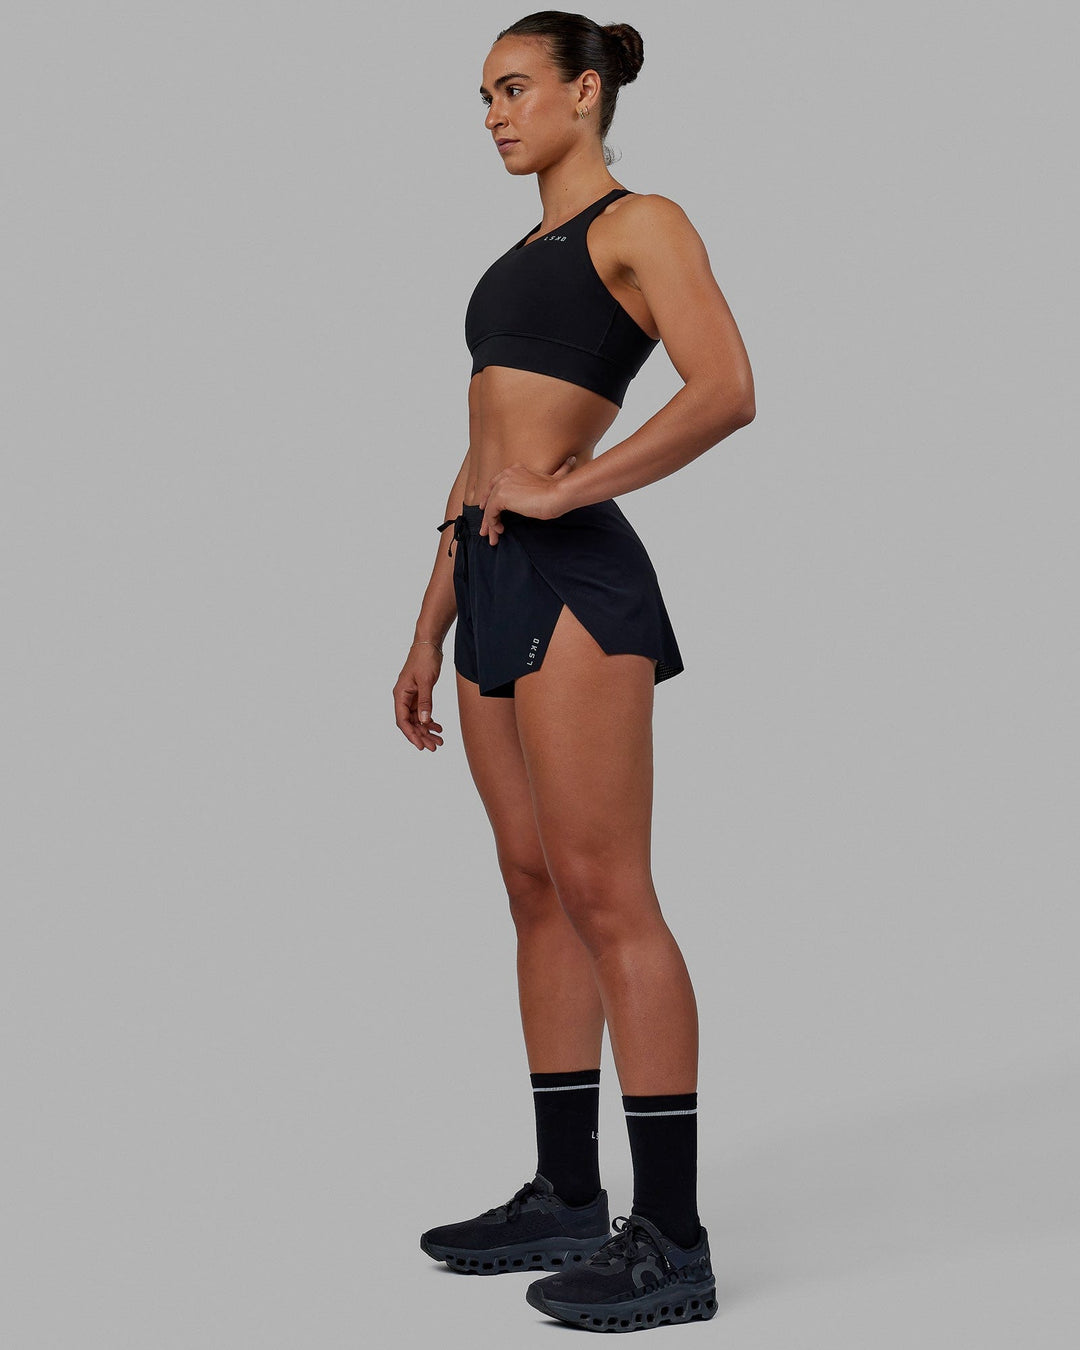 G Gradual Women's Running Shorts Athletic Workout Shorts for Women XL Black